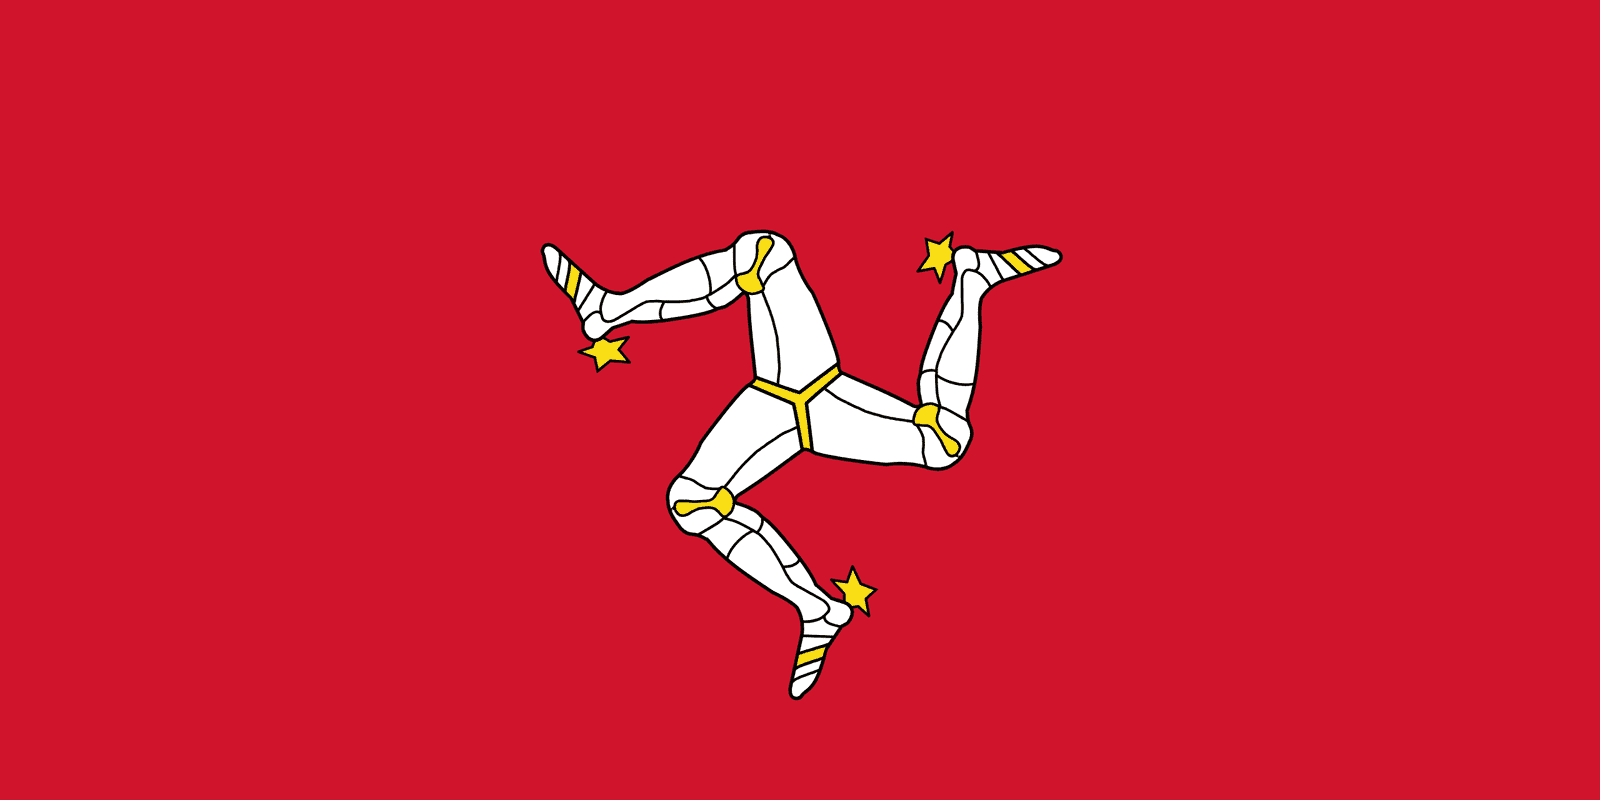 Isle of Man - Powered by Eduhyme.com